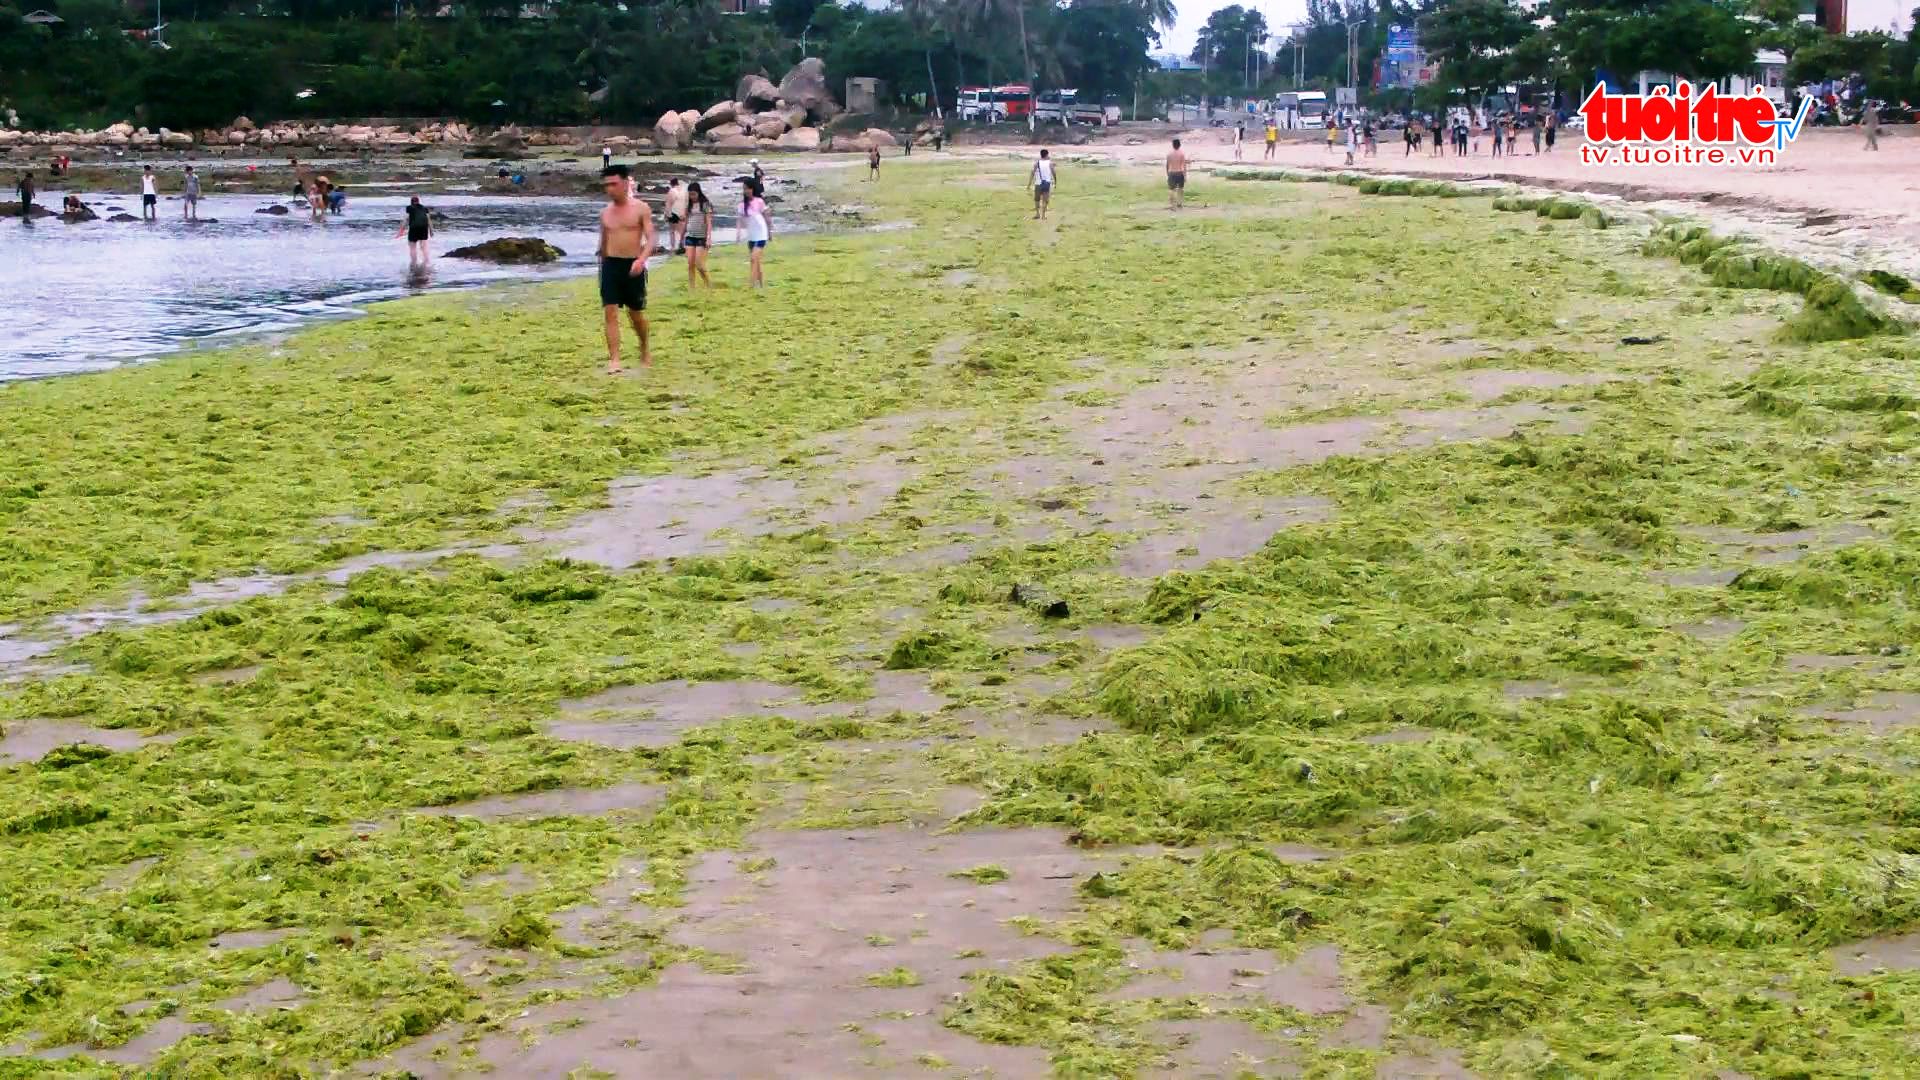 Vietnam’s Hon Chong Beach dyed green by algae